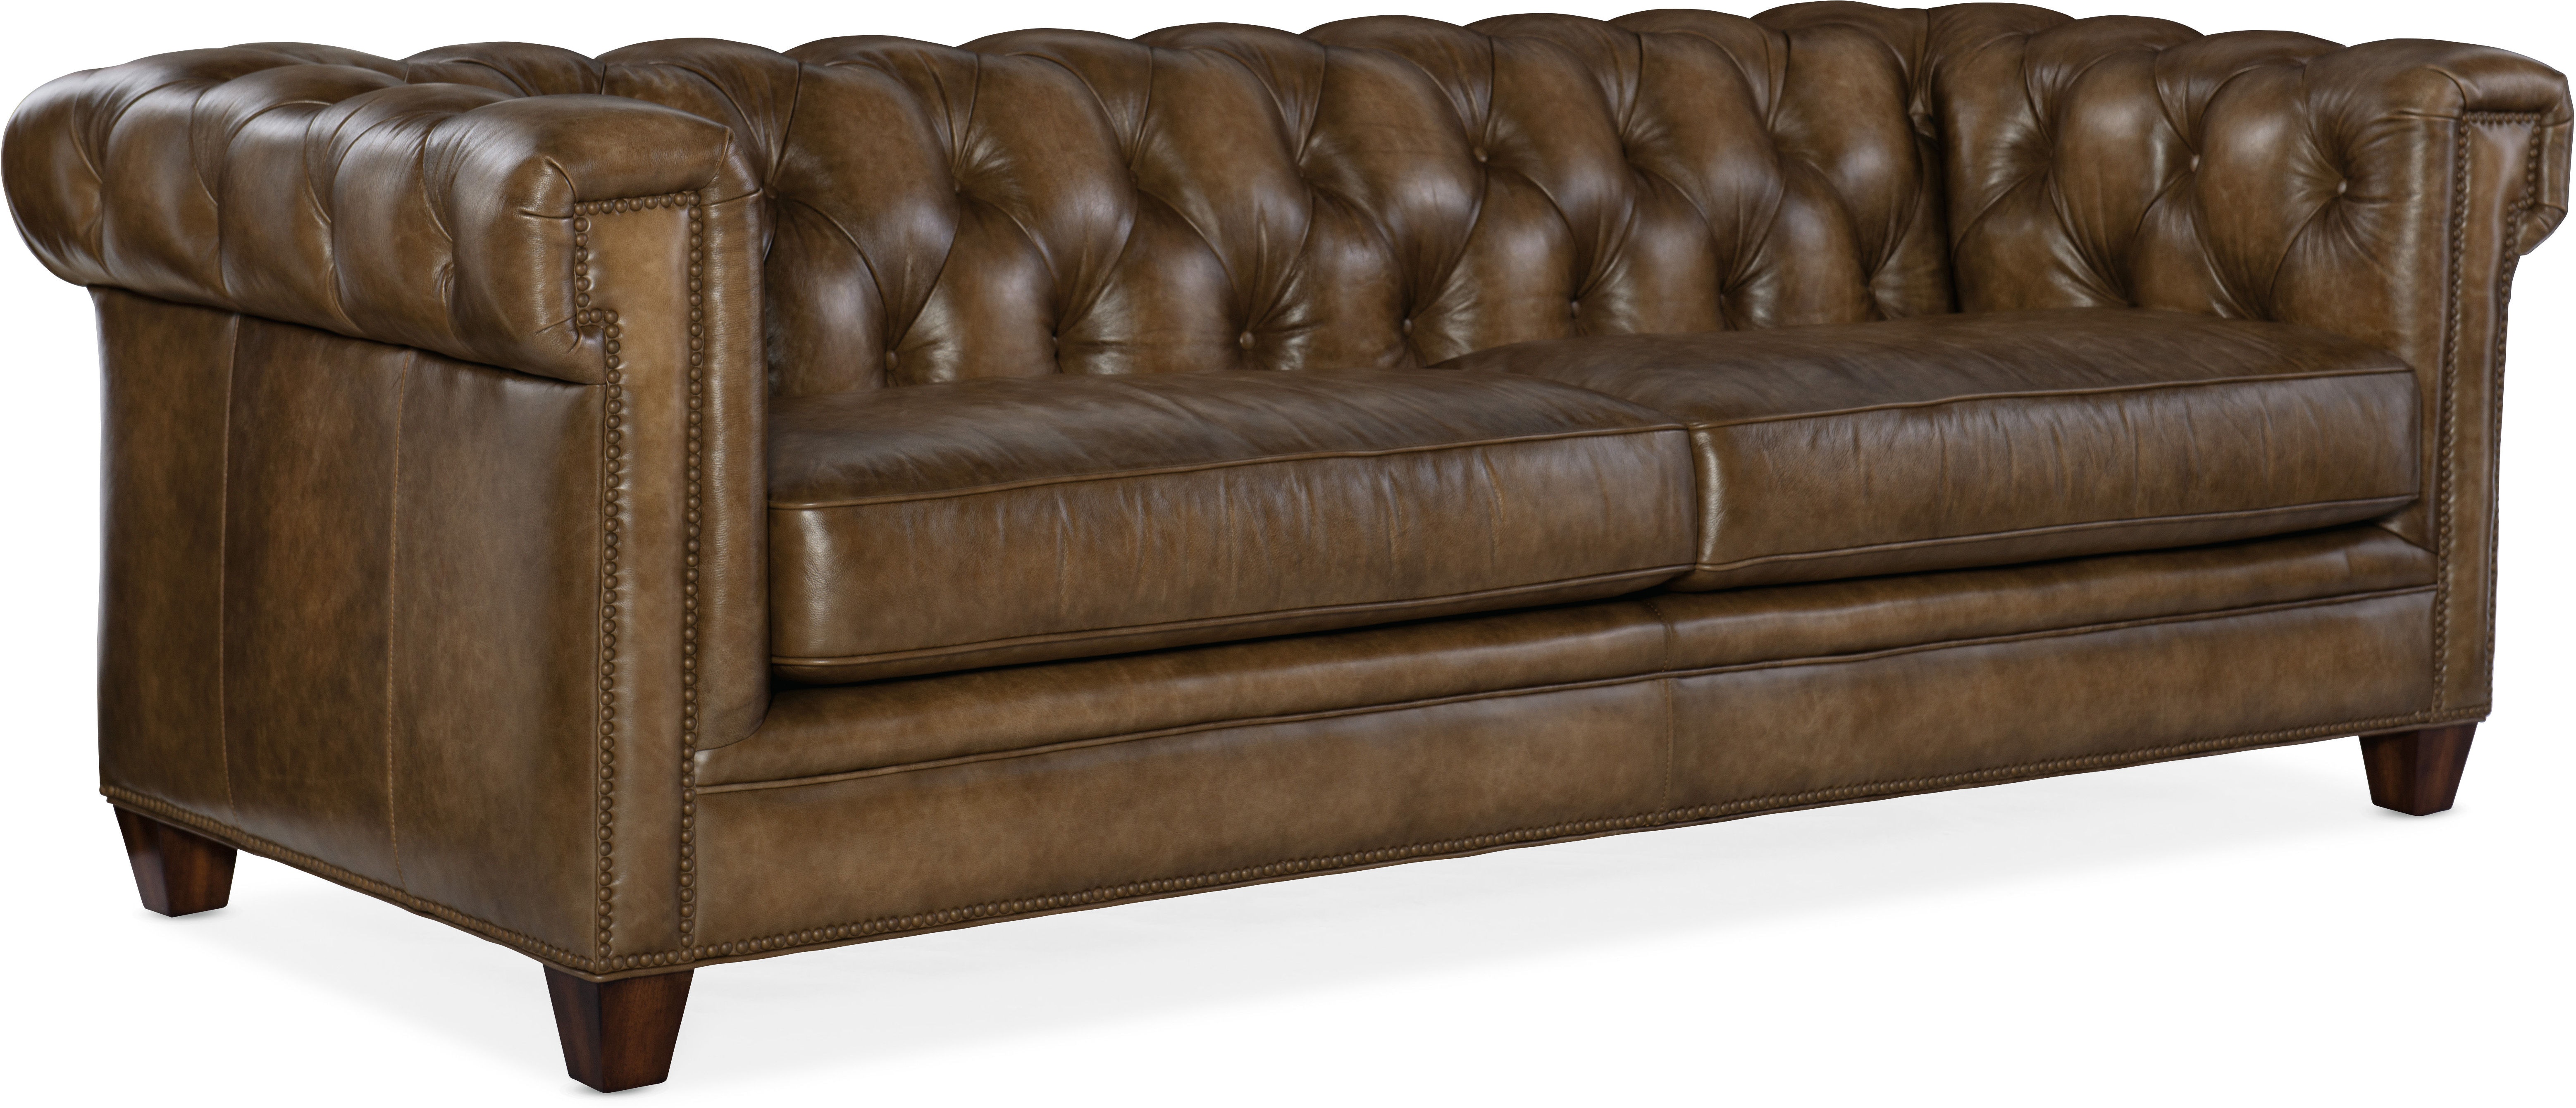 hooker citizen stationary leather sofa